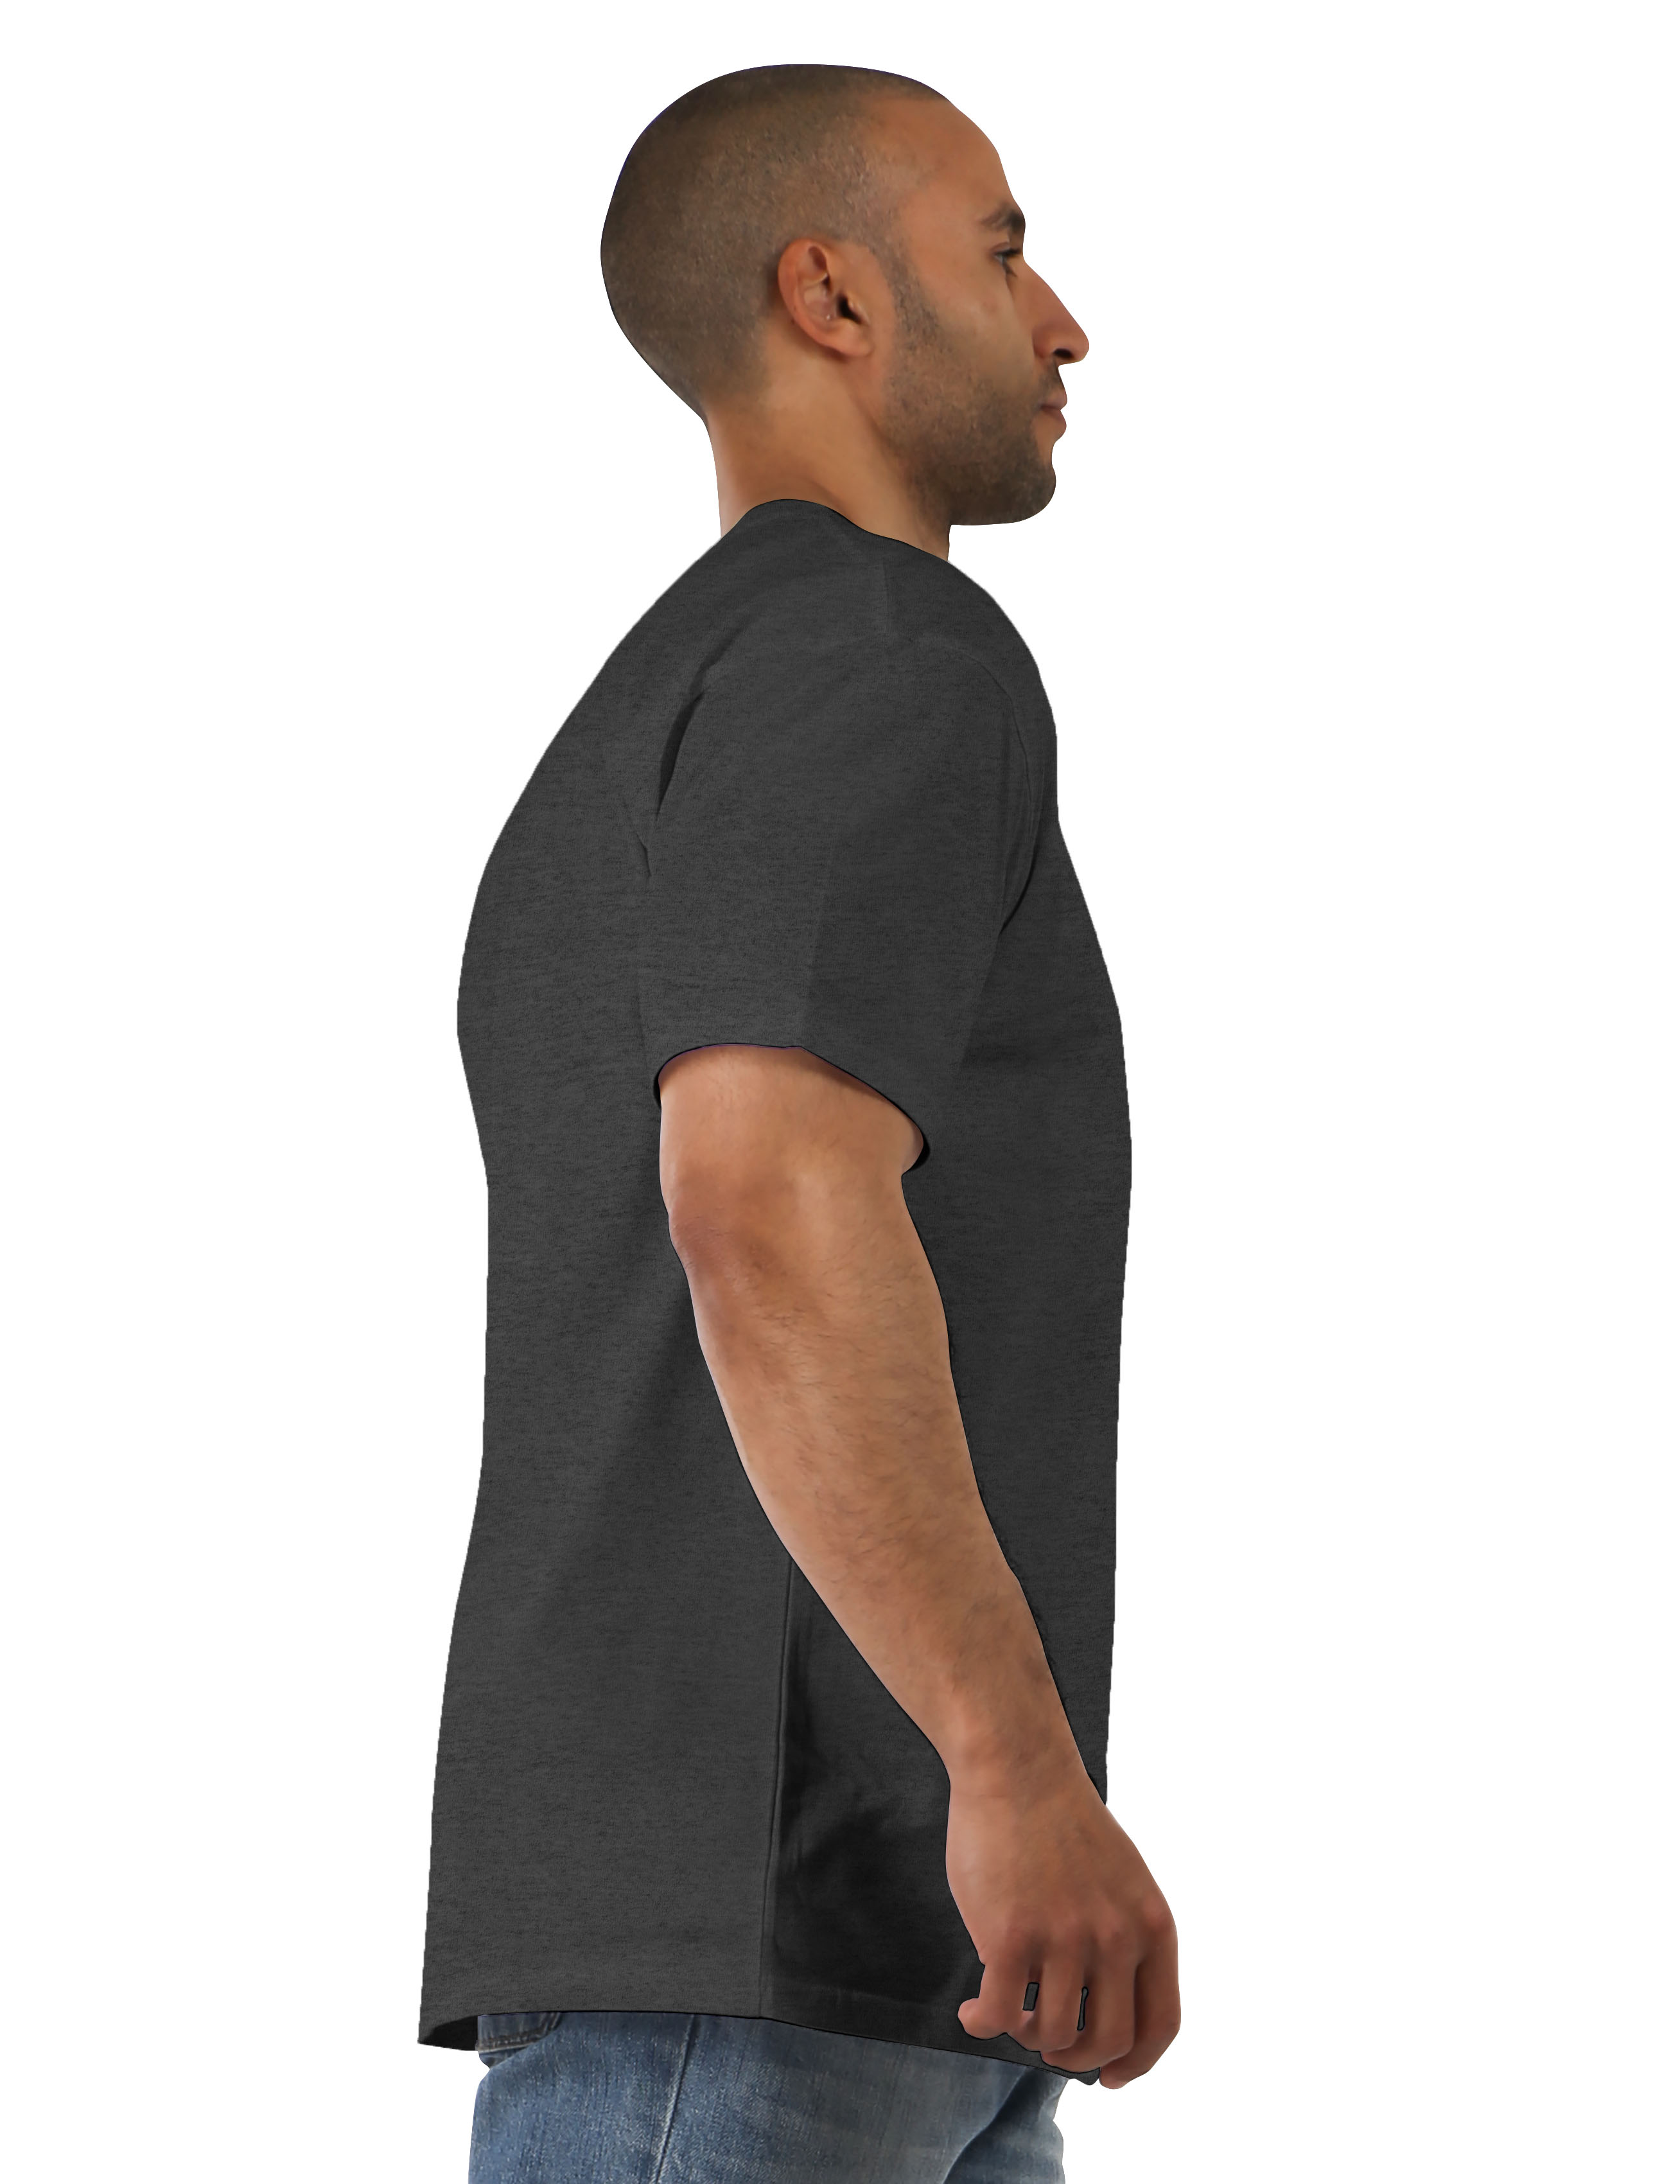 Ma Croix Mens Premium Pocket Tee Lightweight Cotton Workwear Crewneck Short Sleeve T Shirt - image 4 of 6